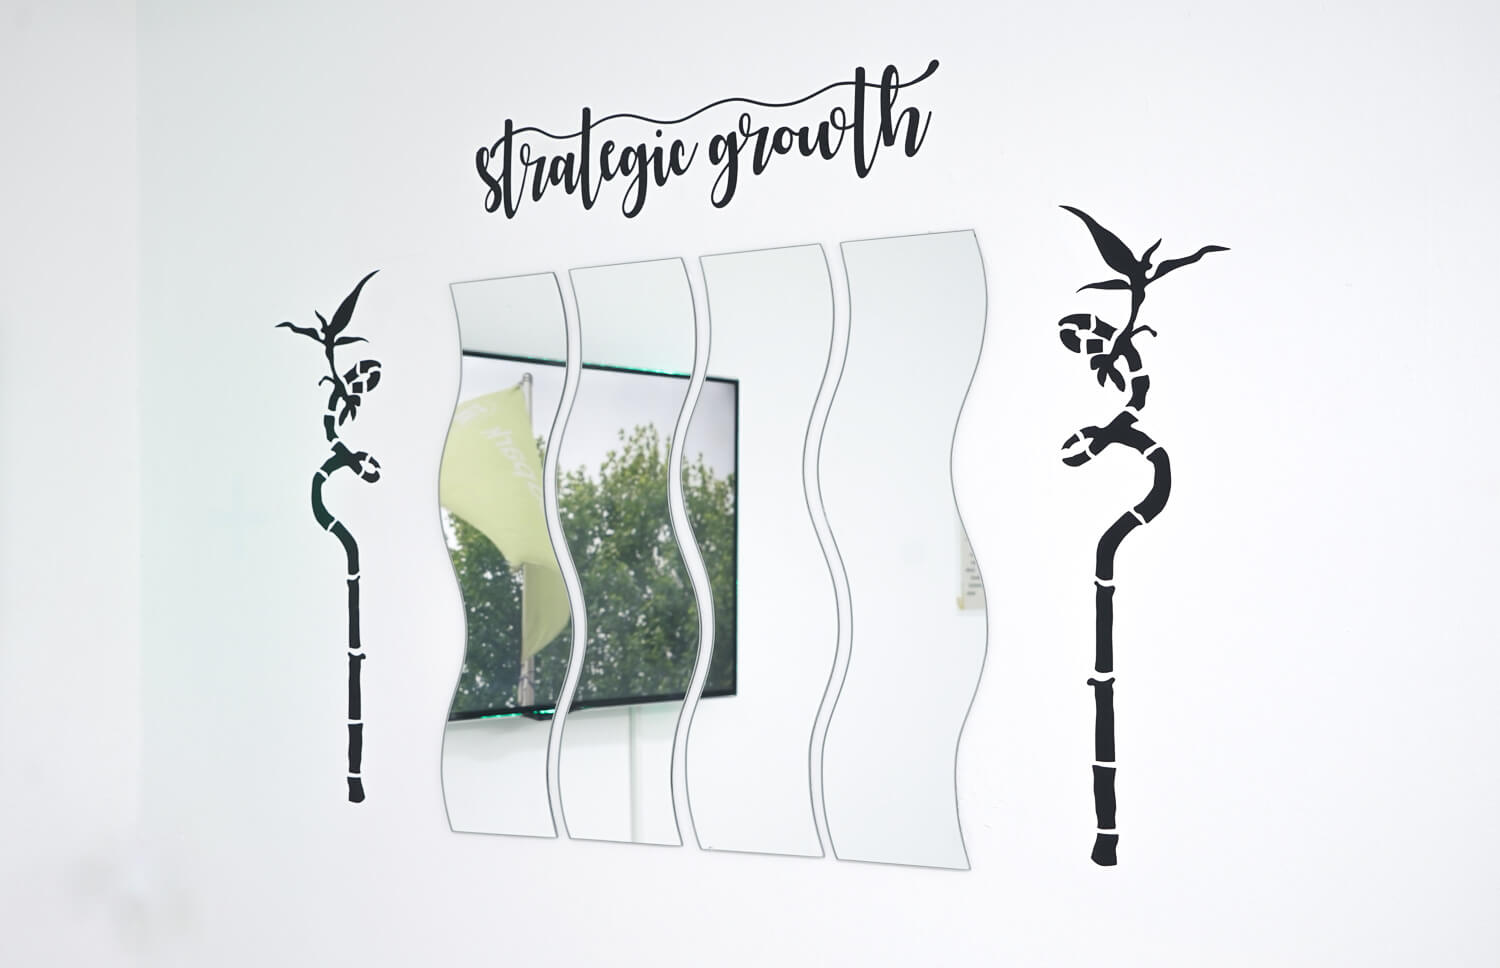 strategic growth by karla zipfel